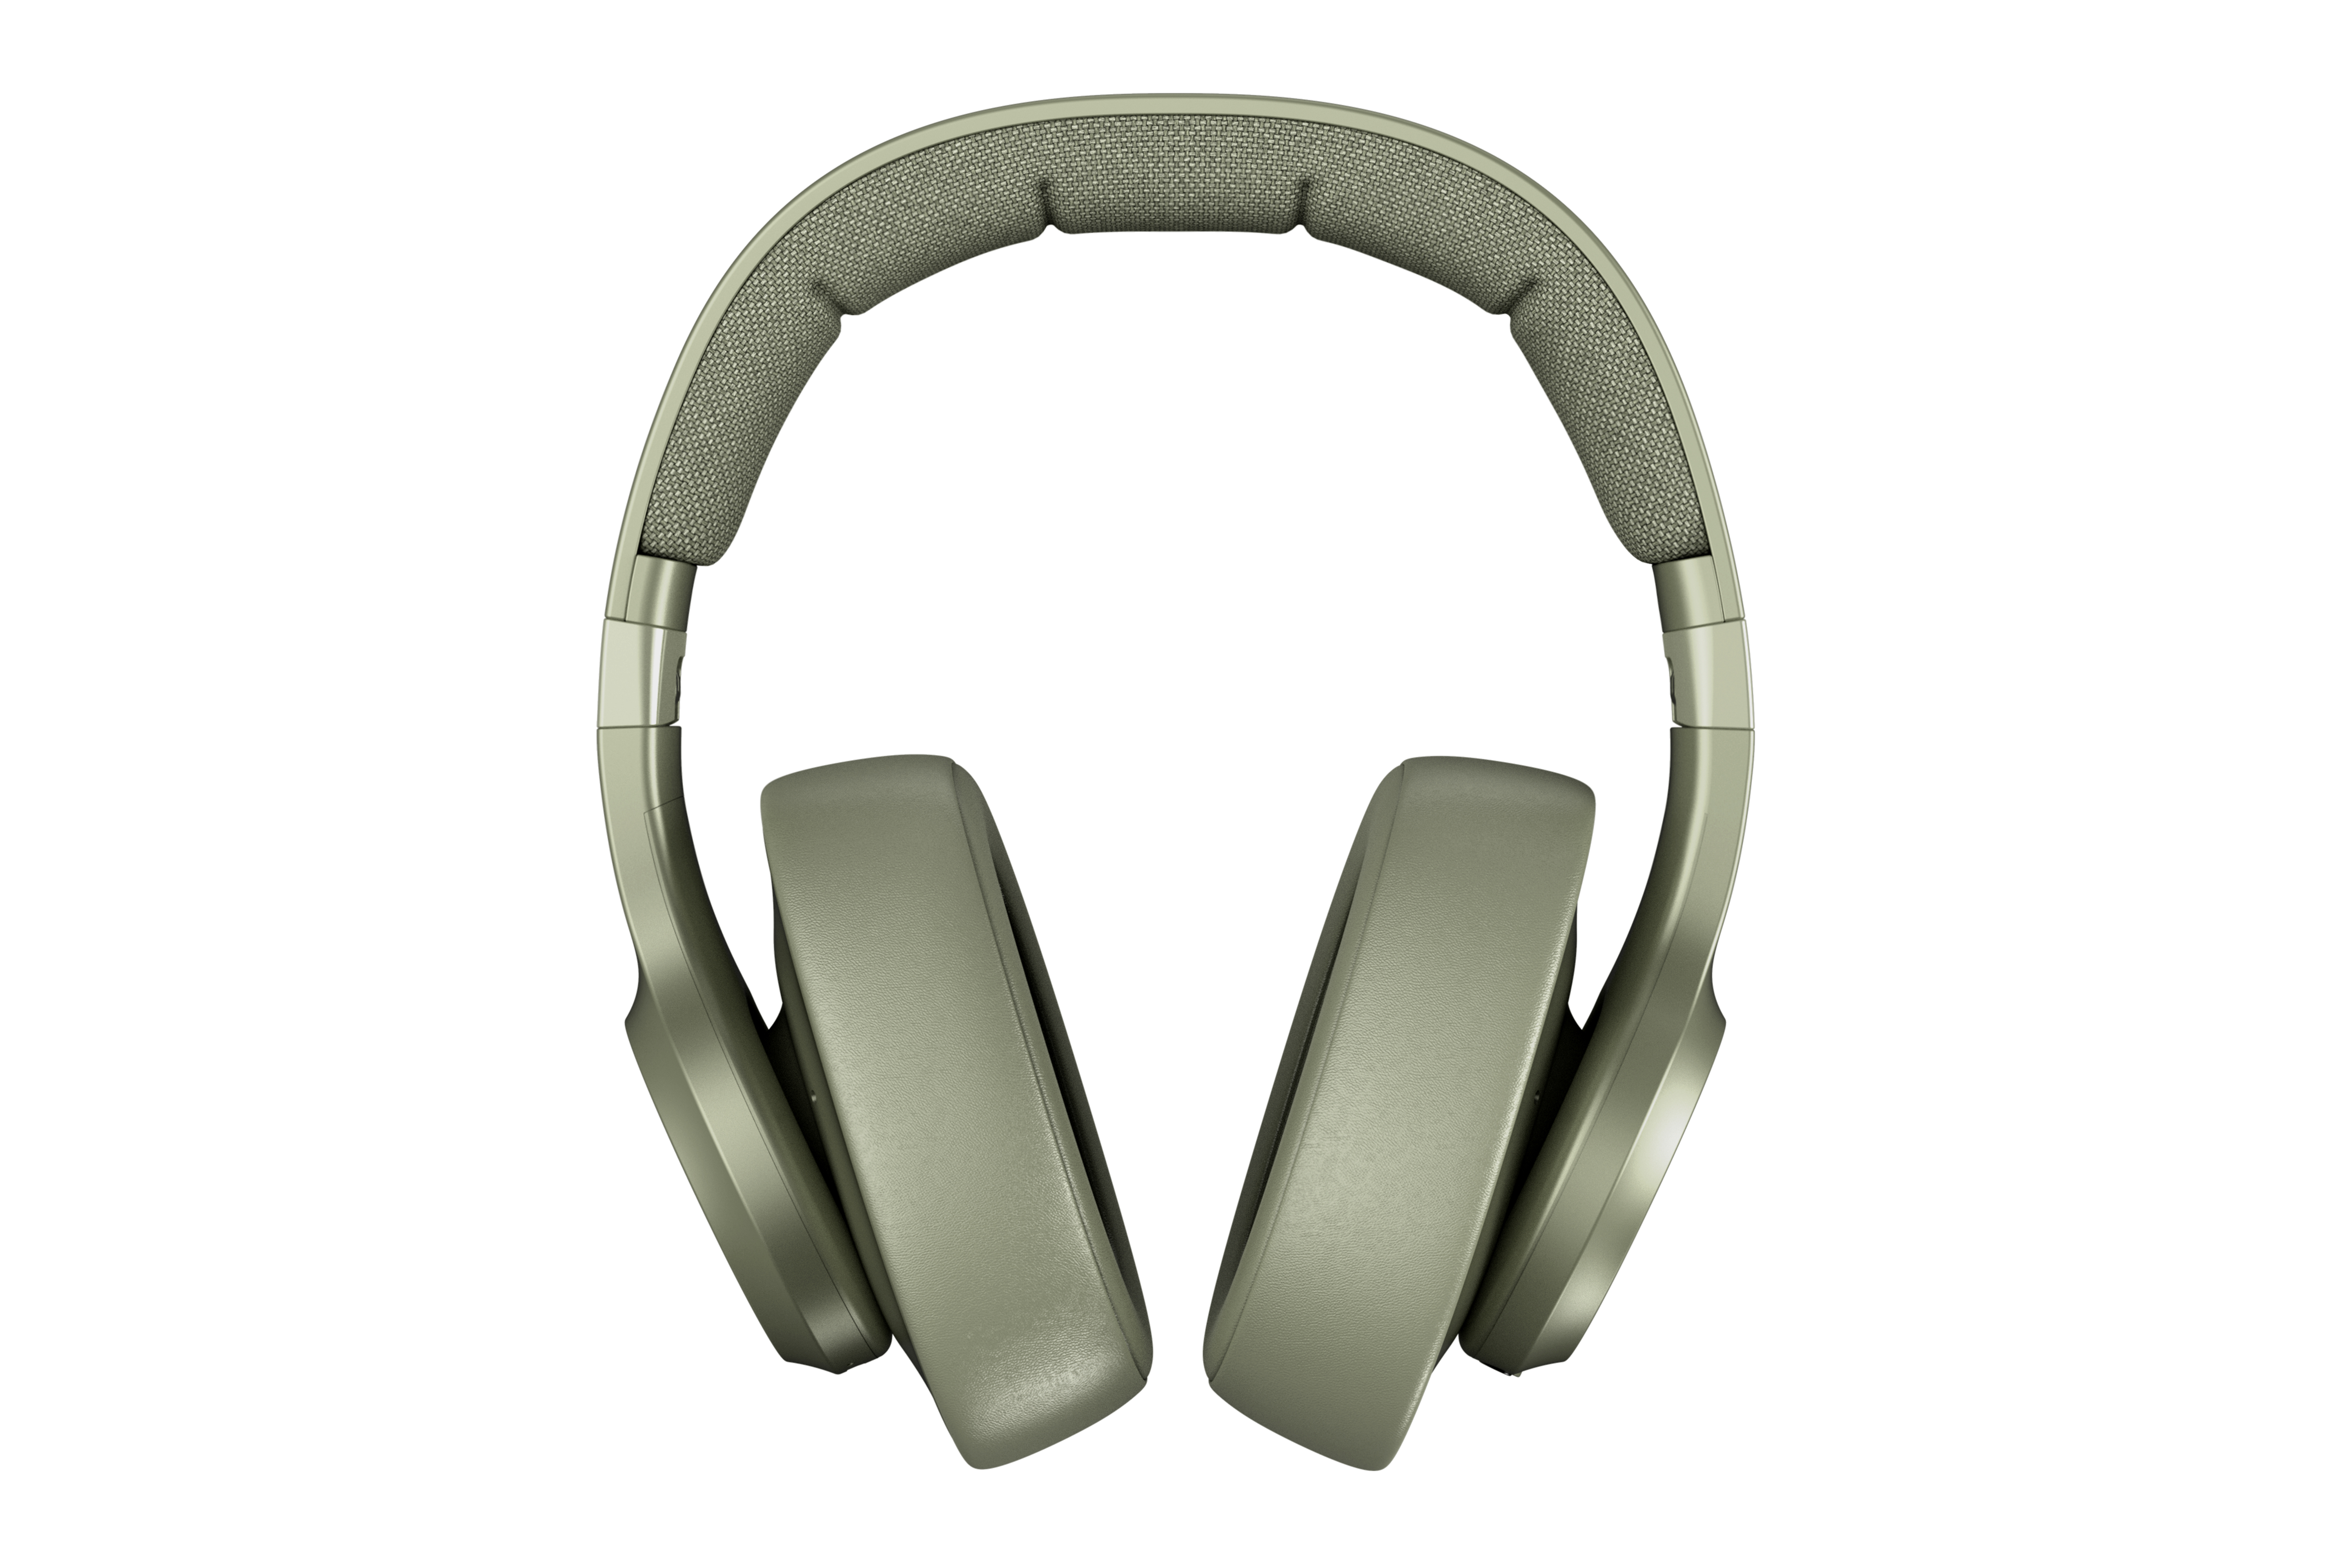 FRESH \'N REBEL Clam 2 ANC, Over-ear Bluetooth Green Dried Kopfhörer